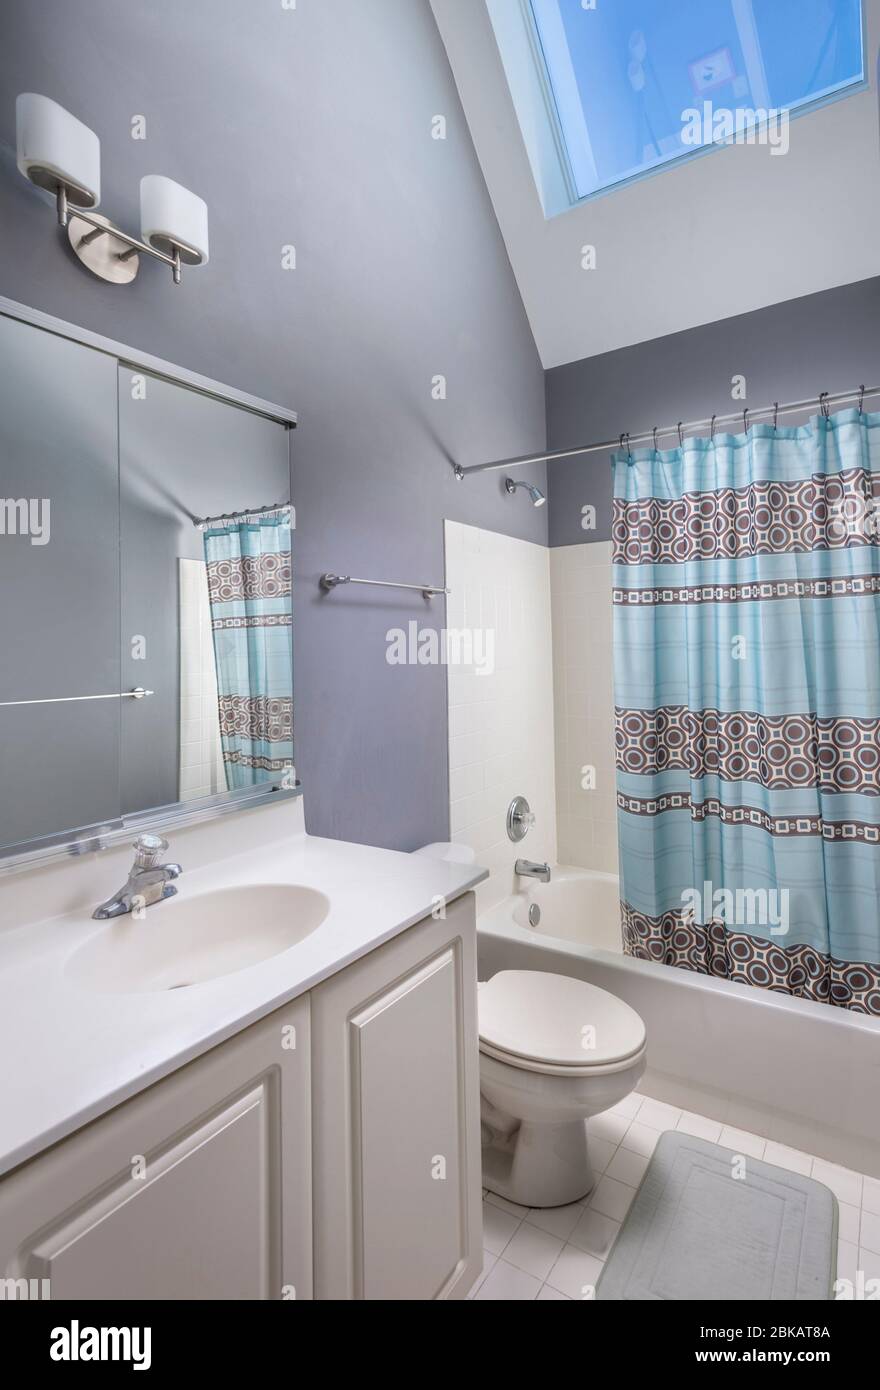 Residential Bathroom interior Stock Photo